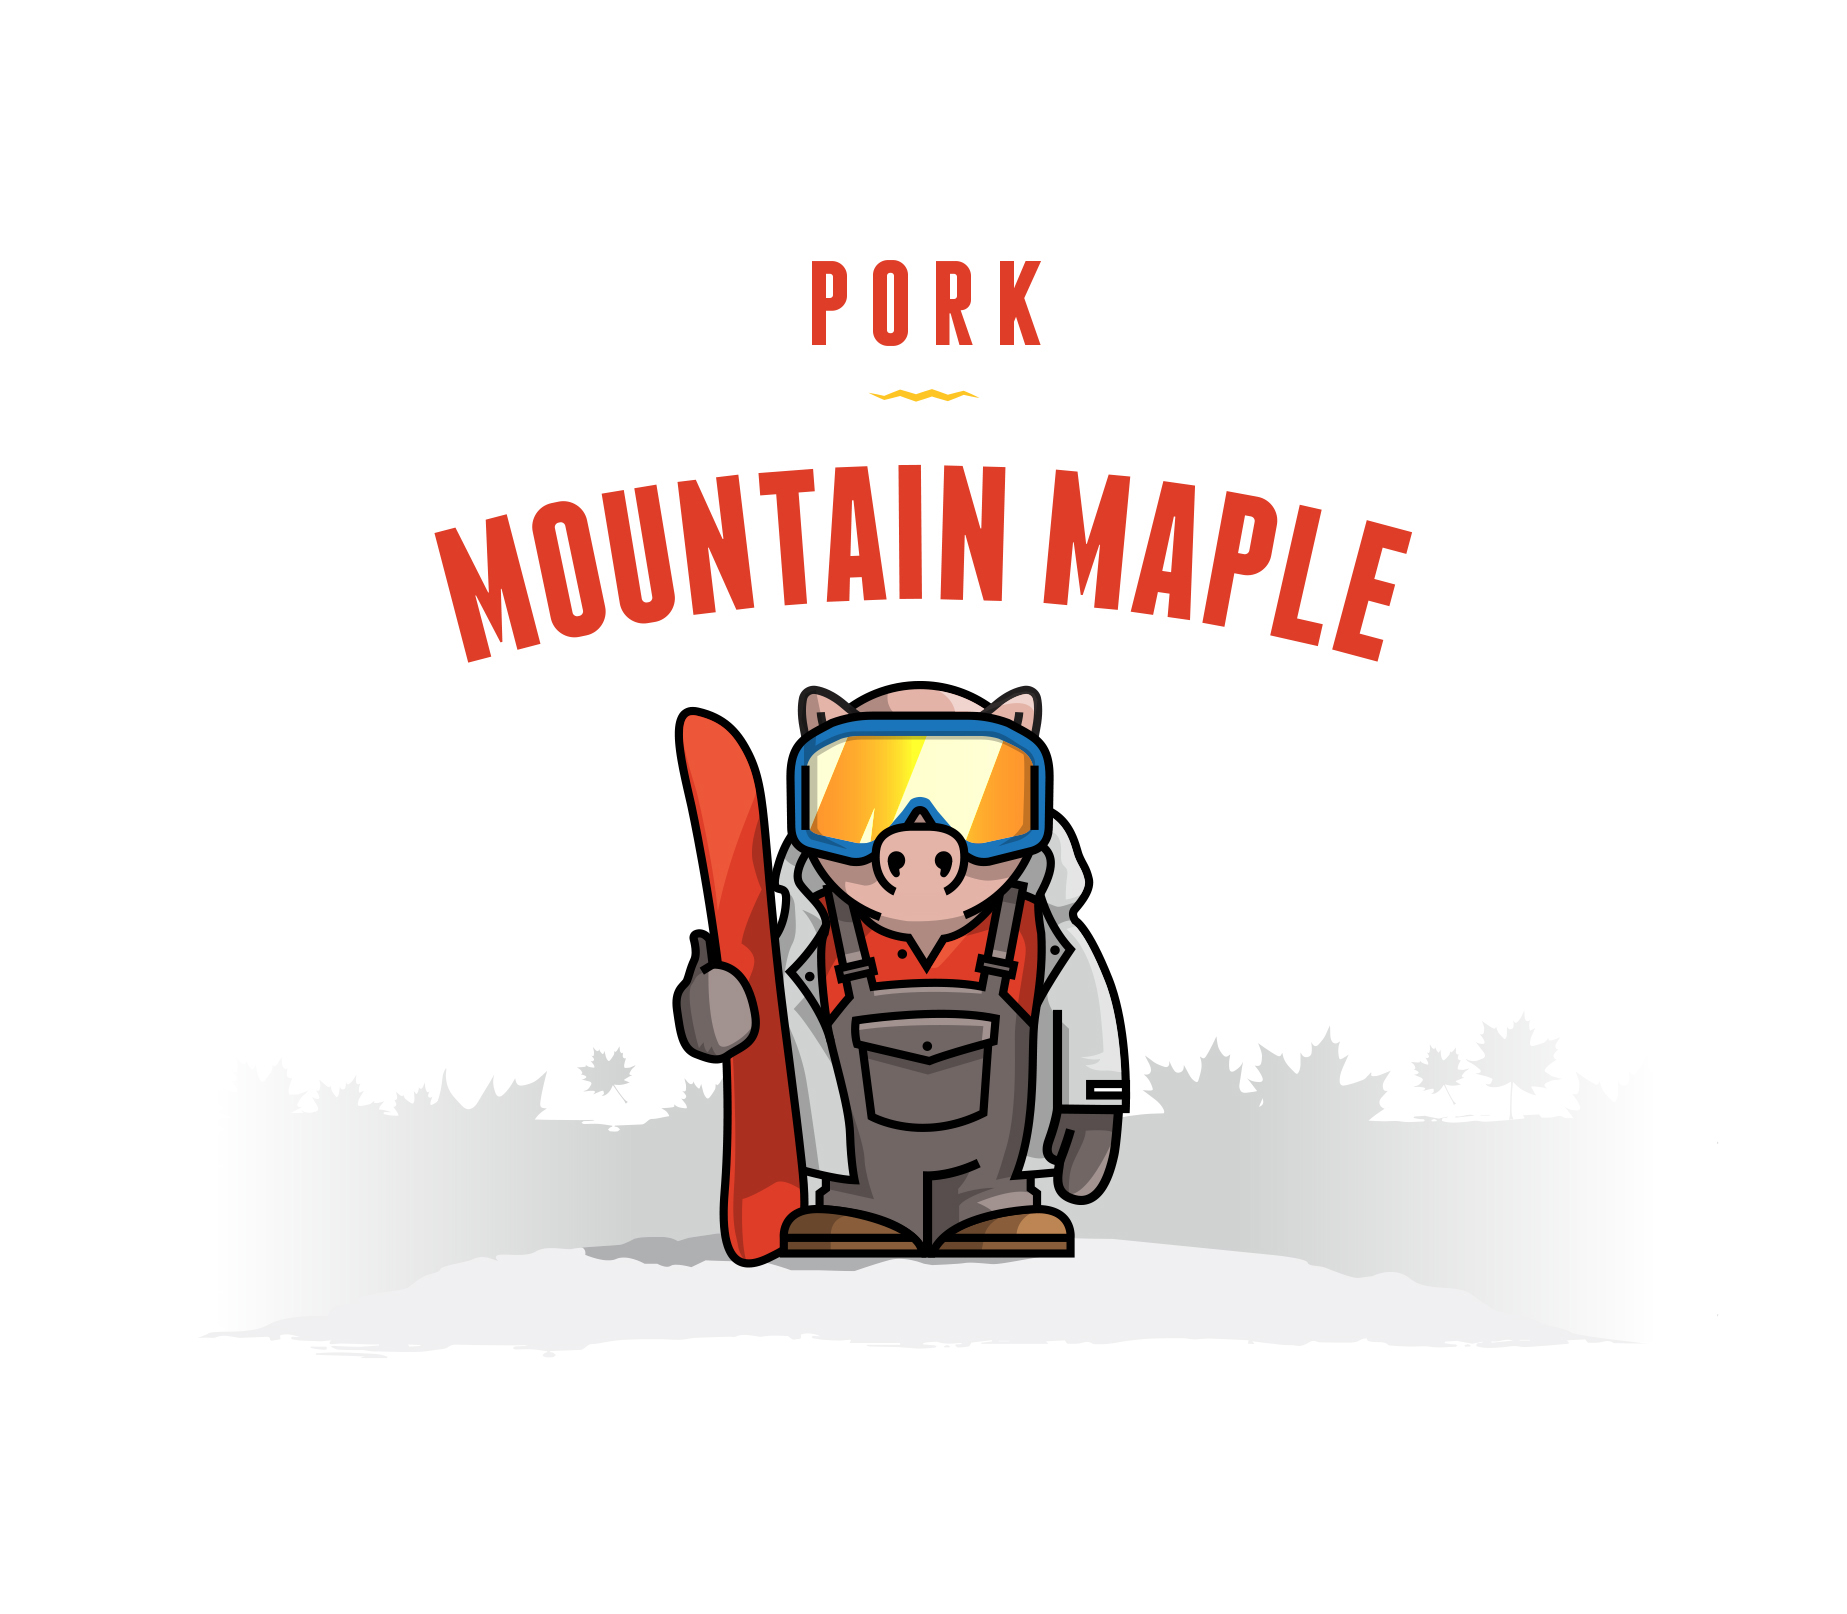 Pork_Mountain_Maple_flavor_1.jpg